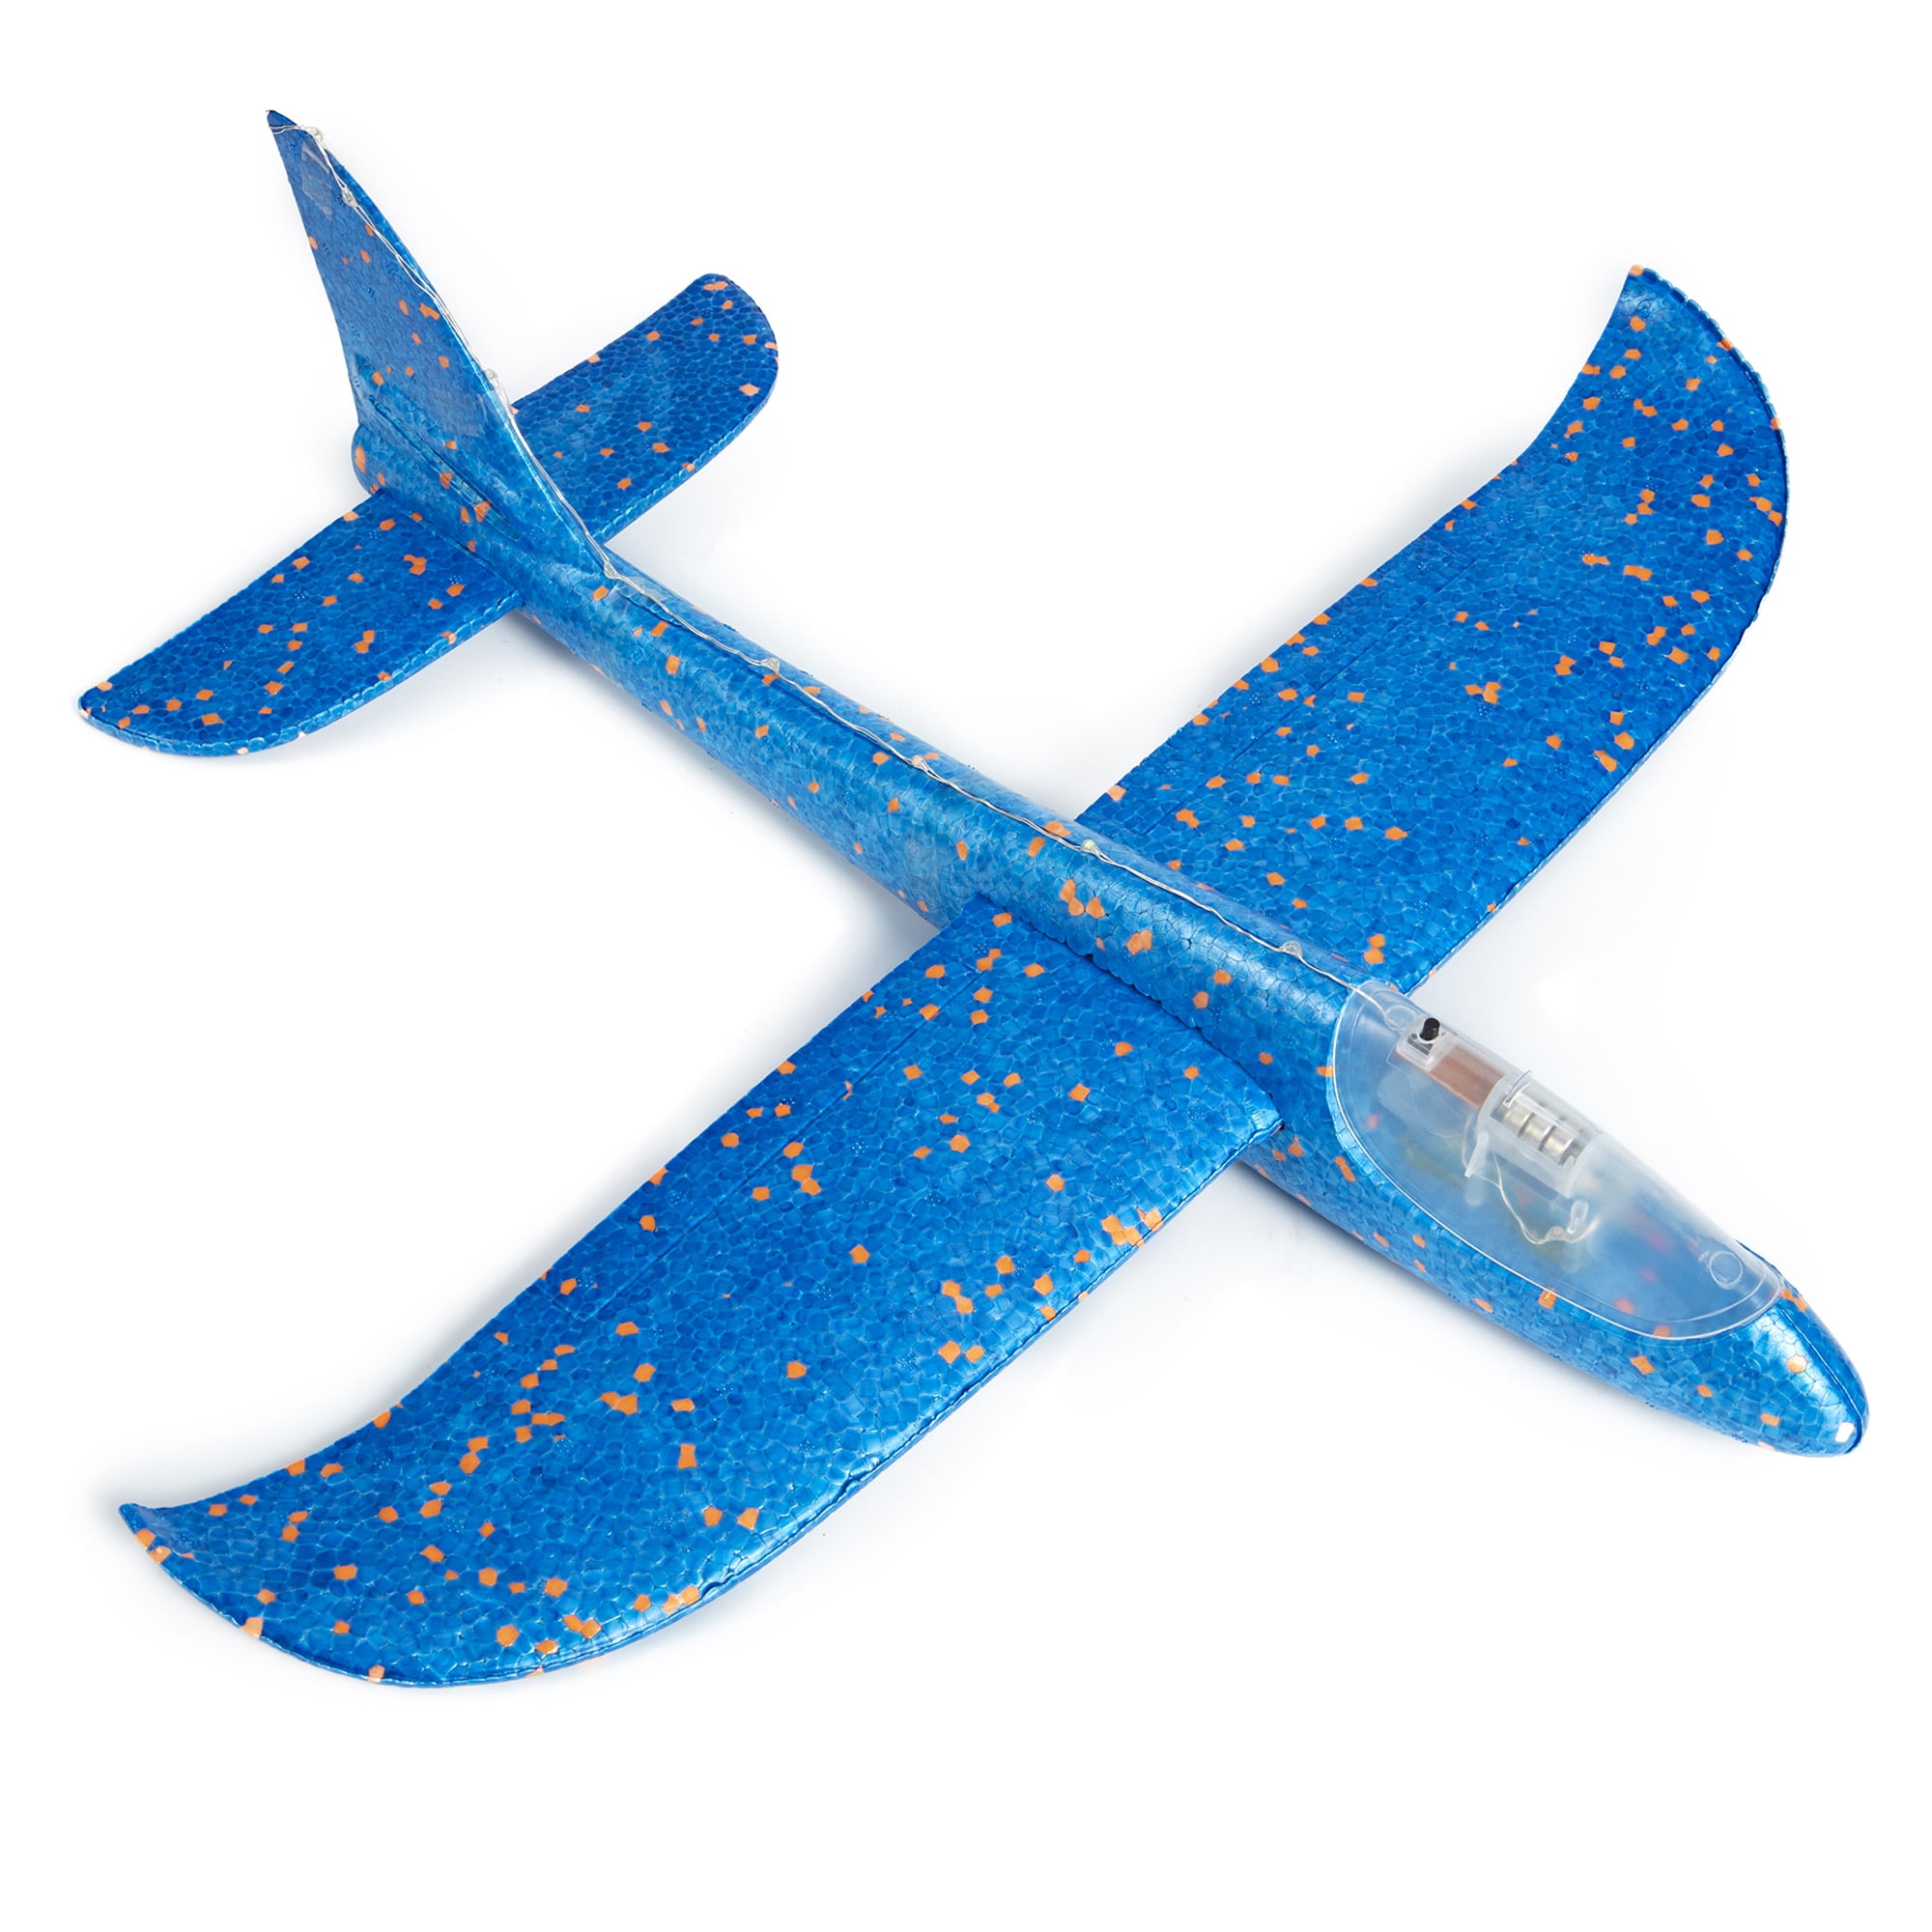 New RC Radio Control Glider Foam EPP Airplane Plane Launch Kids Toy Gift Little 